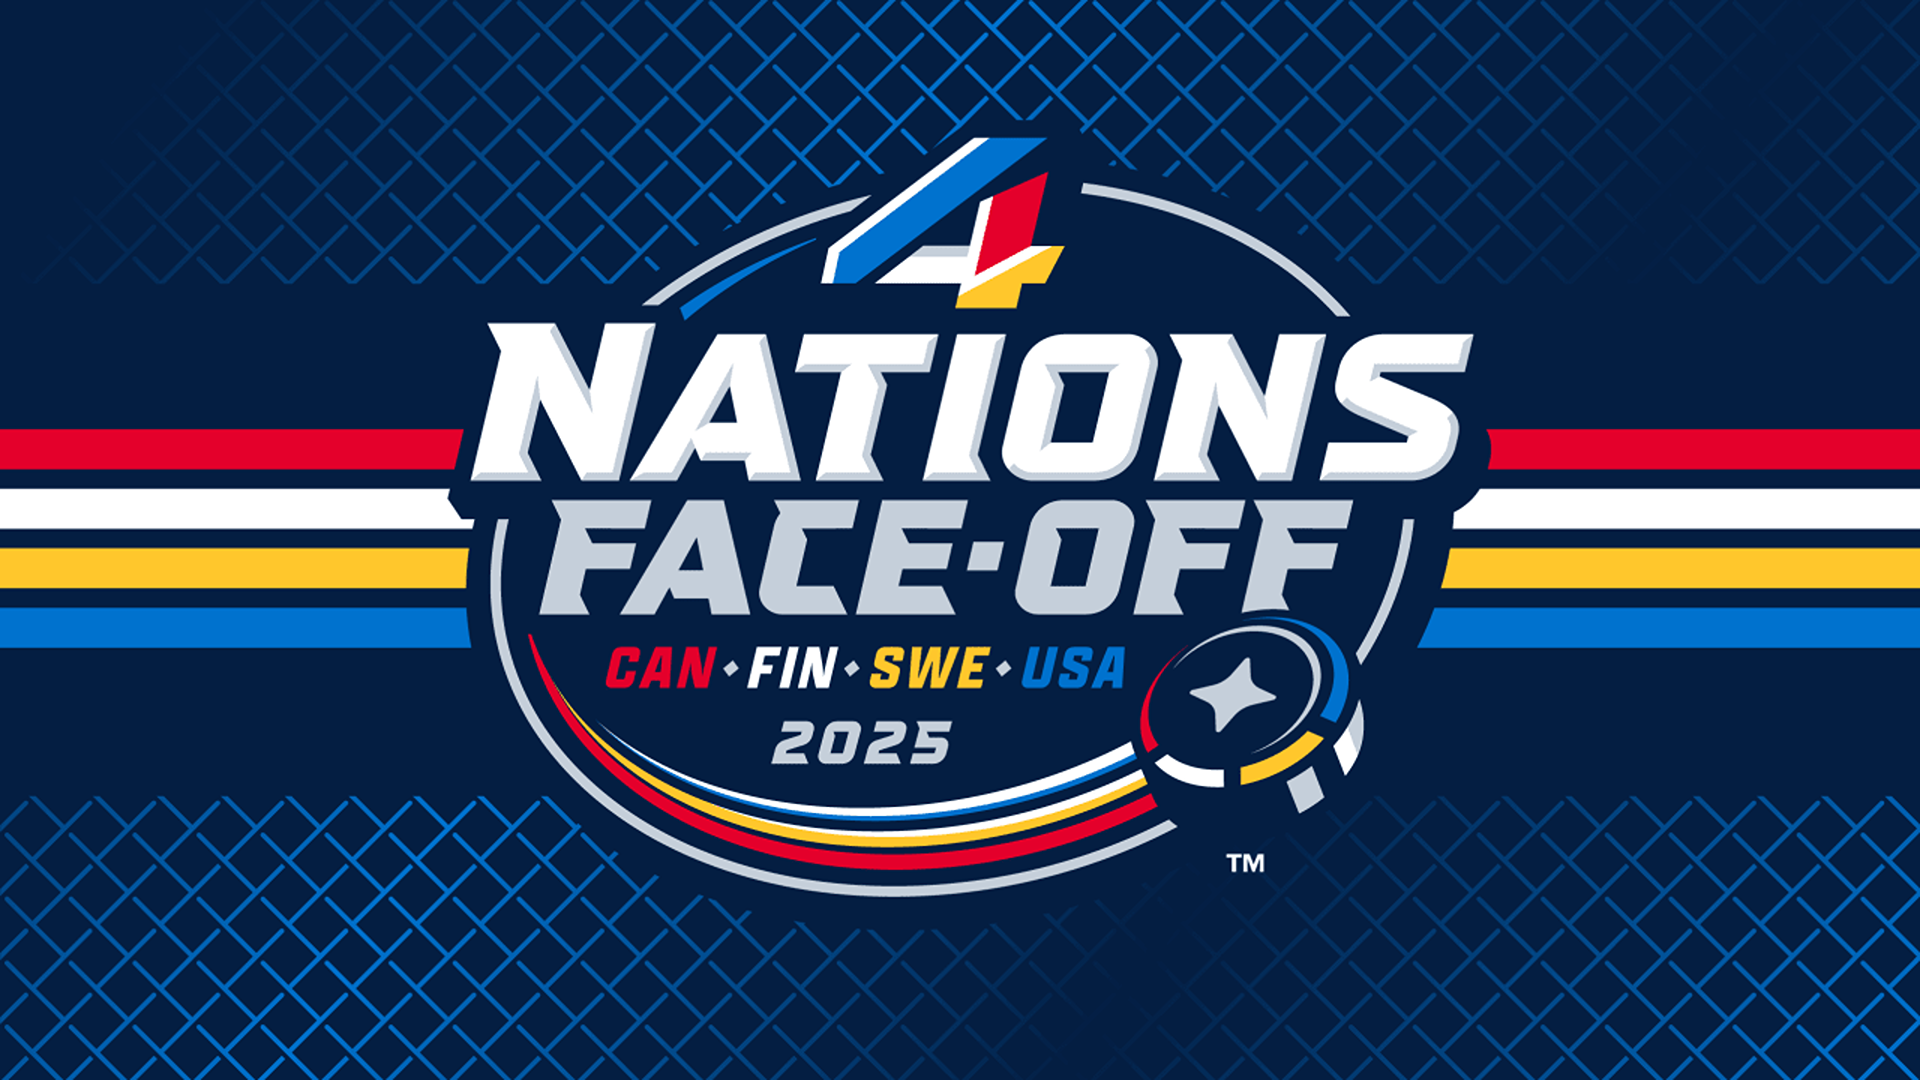 4 Nations Face-Off: Ανακοινώθηκαν τα πρώτα 6 ονόματα για Φιλανδία και Σουηδία